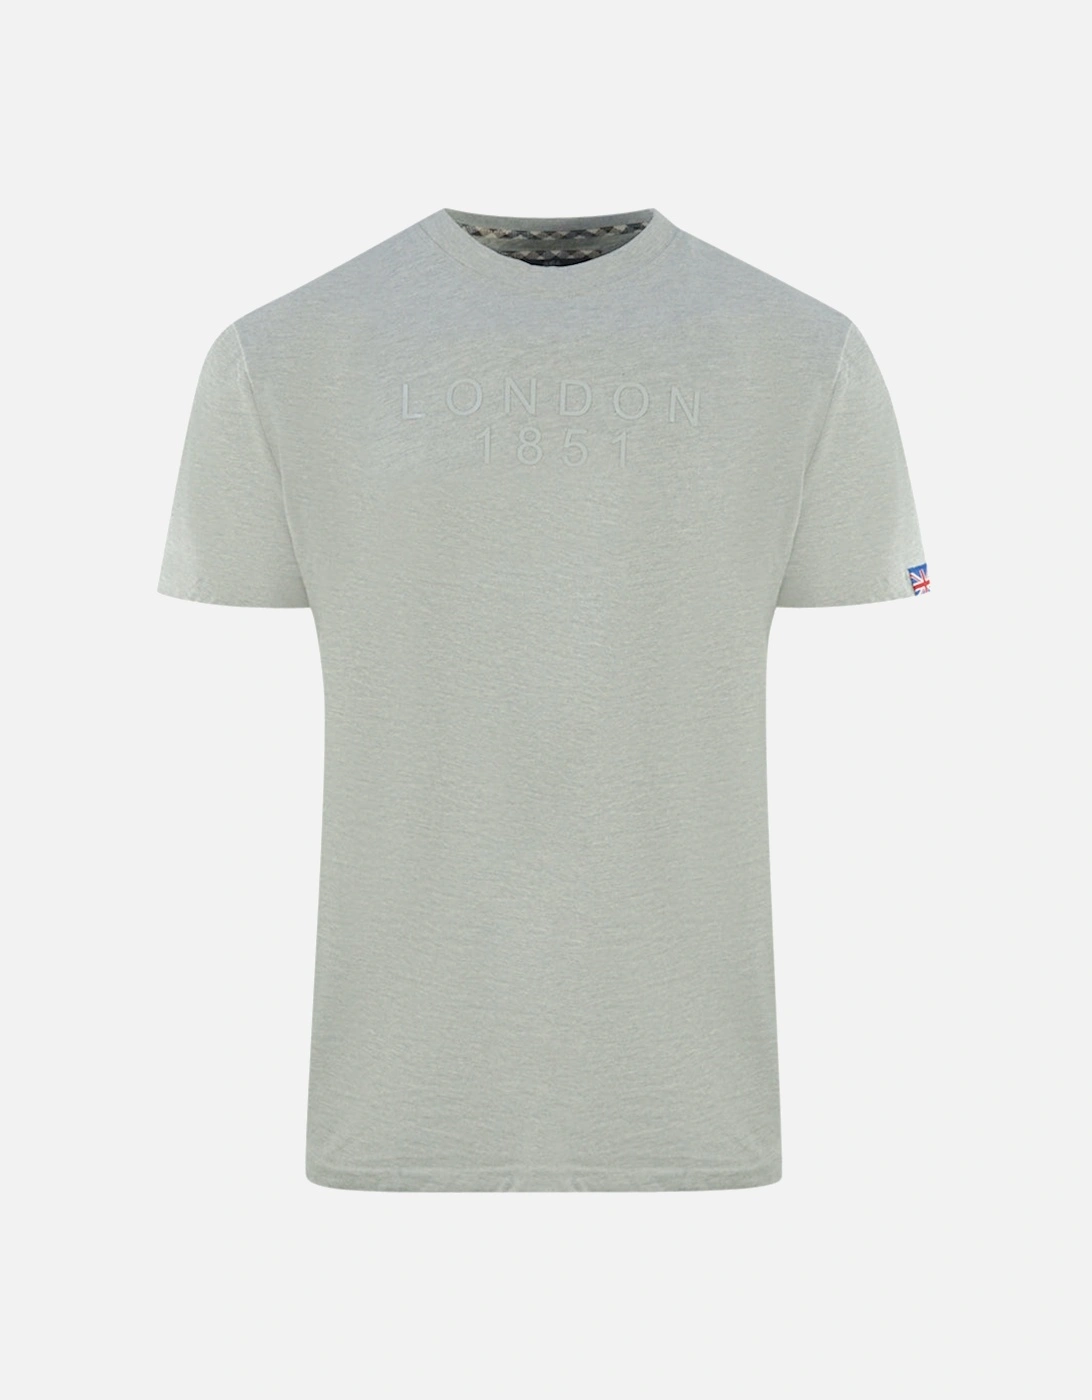 London 1851 Tape Logo Grey T-Shirt, 4 of 3